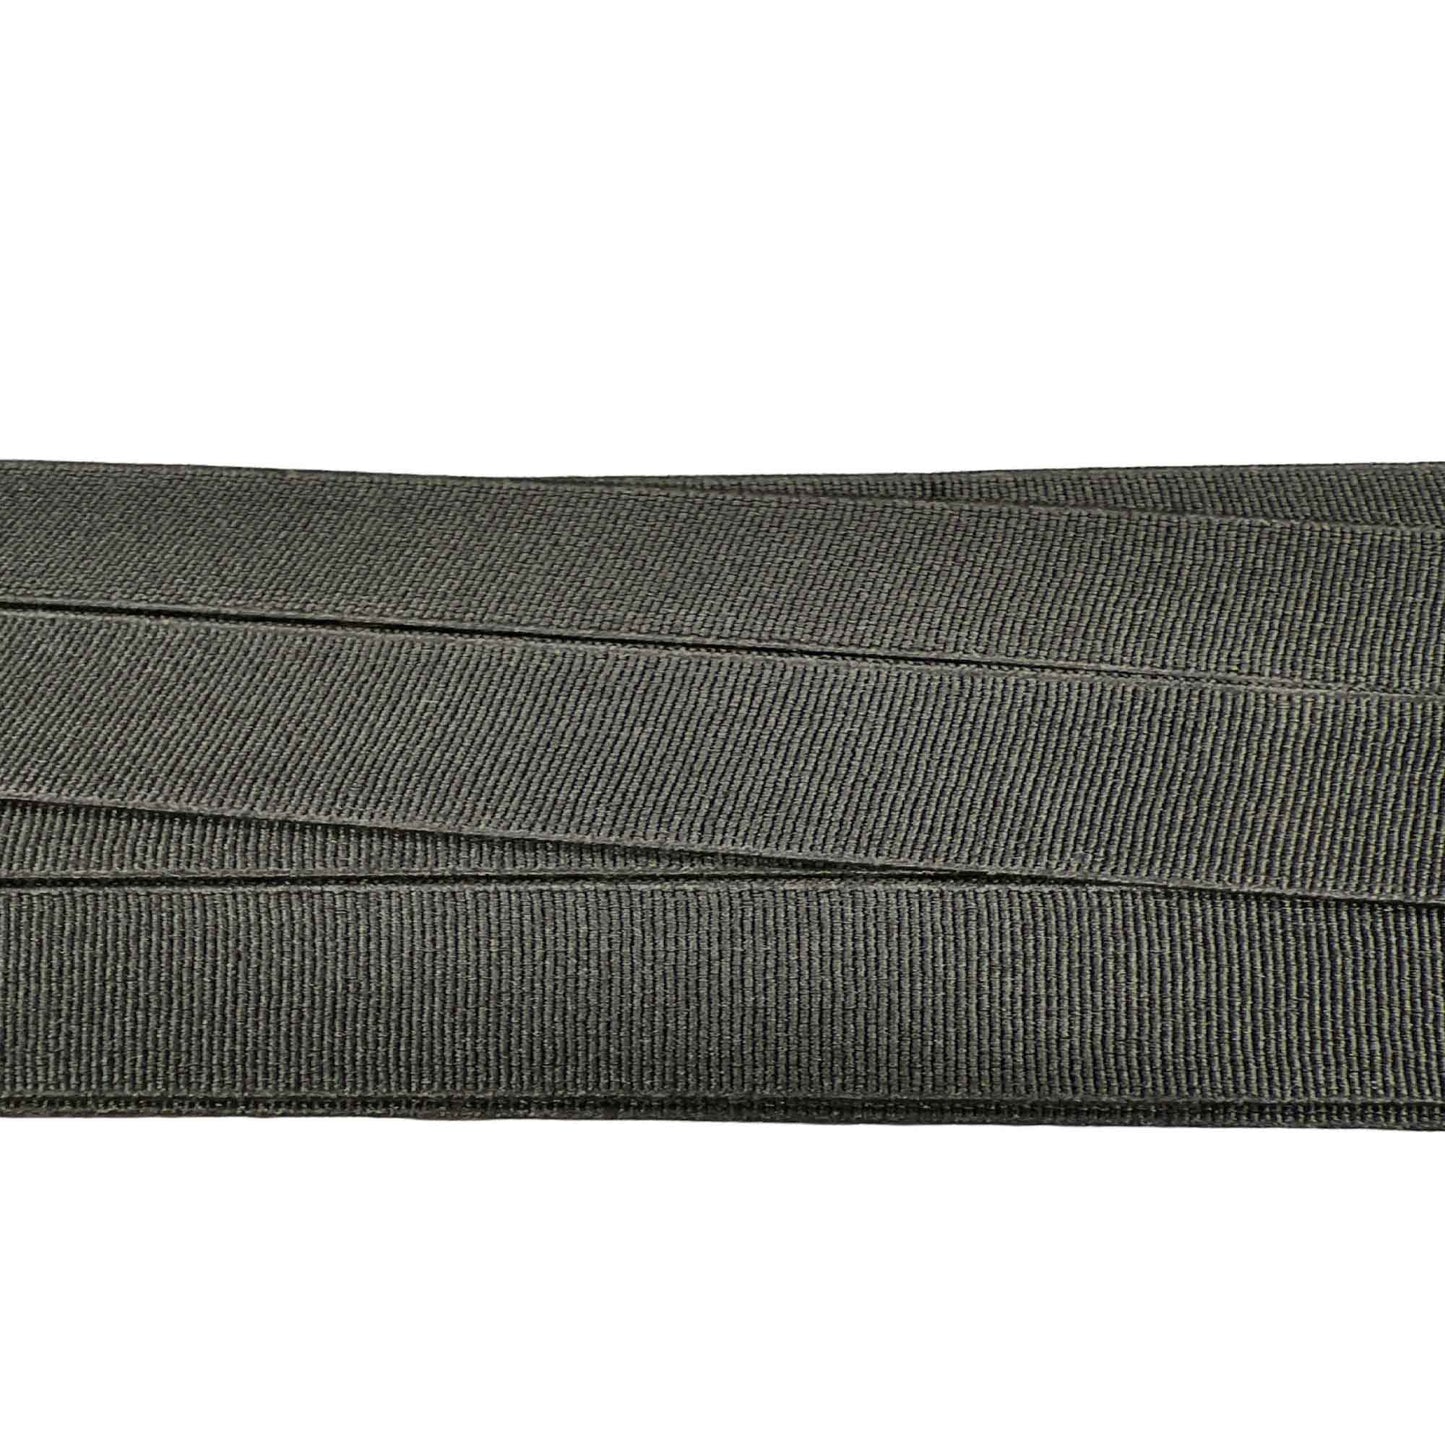 25mm Black High Density Elastic Roll 40m - Birch Sewing Fabric Polyester Craft